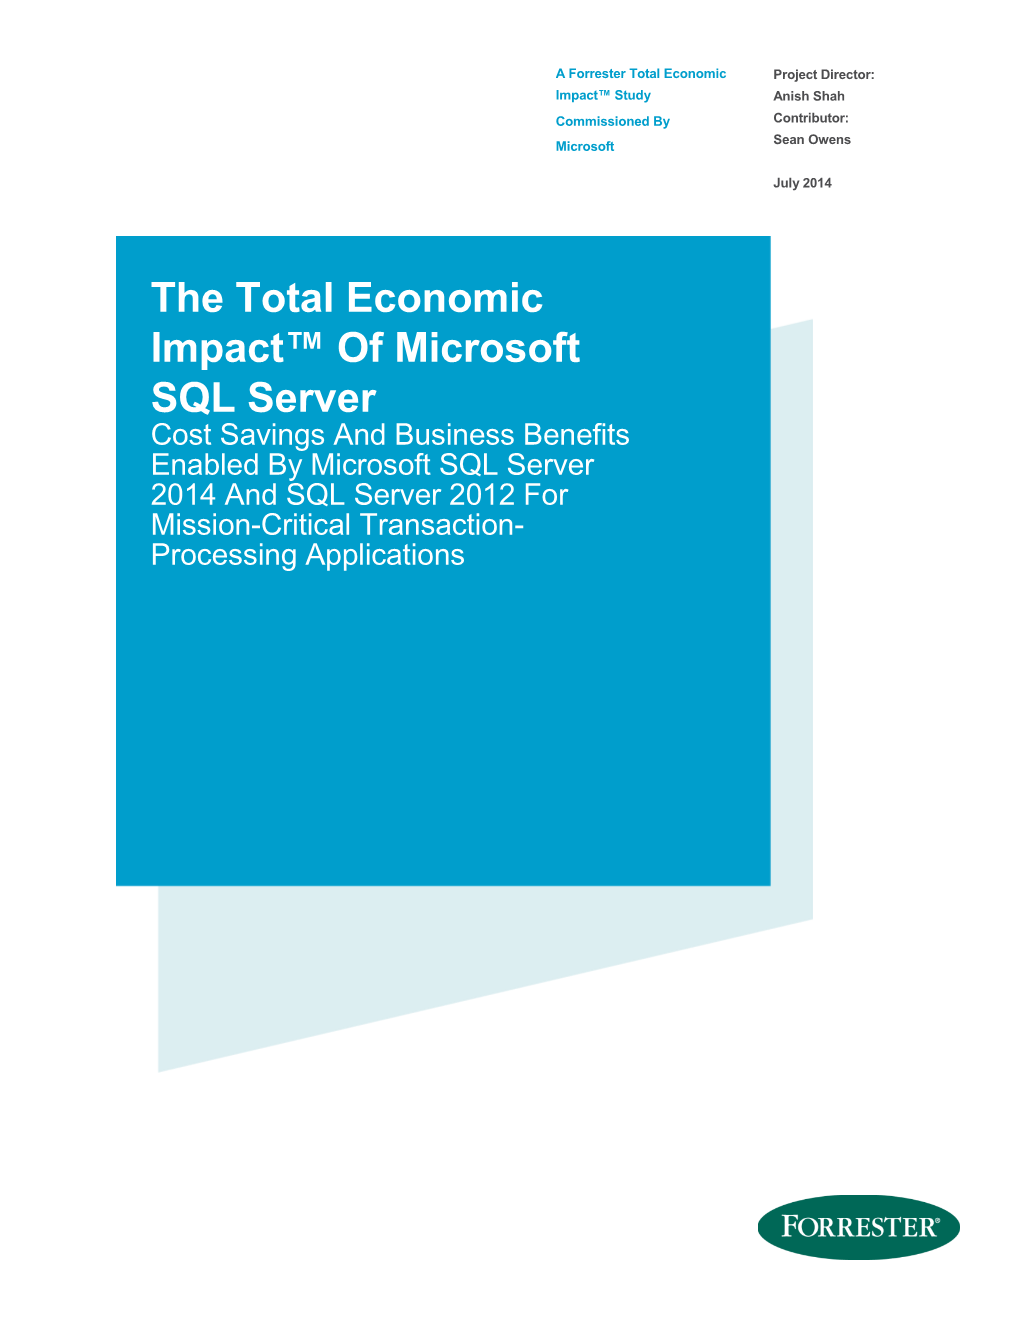 The Total Economic Impact™ of Microsoft SQL Server